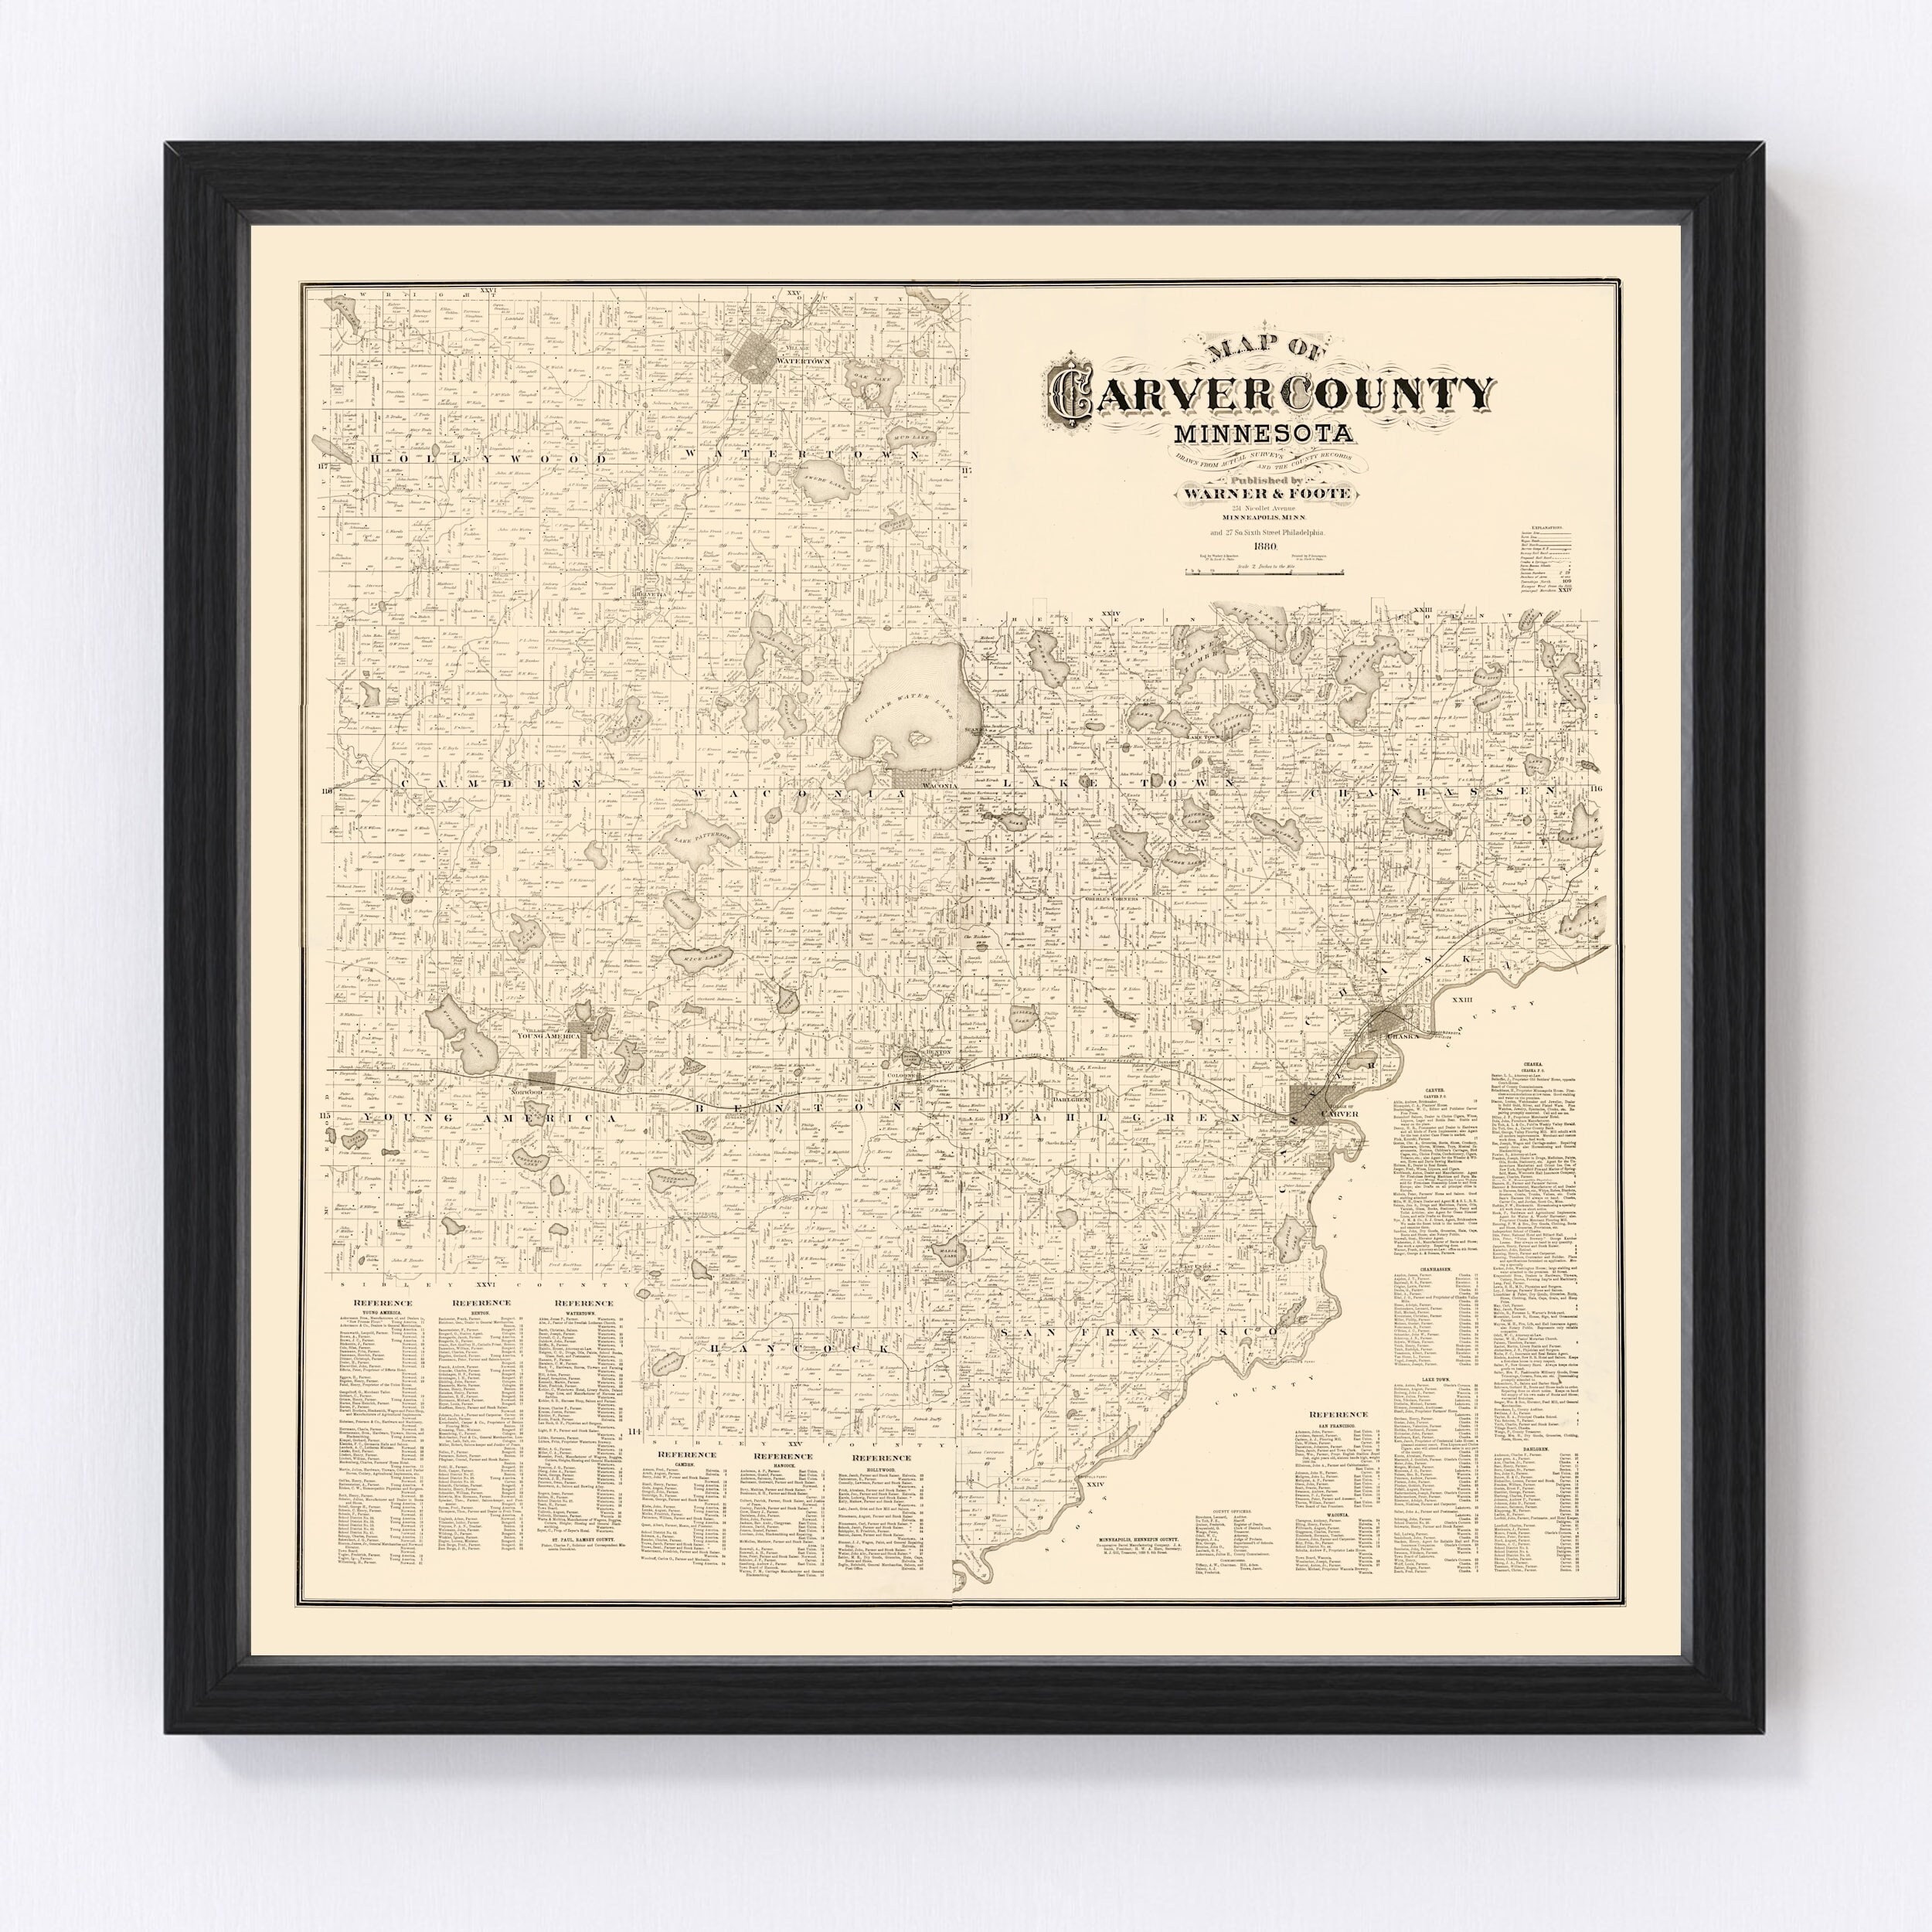 Standard map of Carver County, Minnesota. St. Paul : Minnesota Map  Publishing Co., 1913